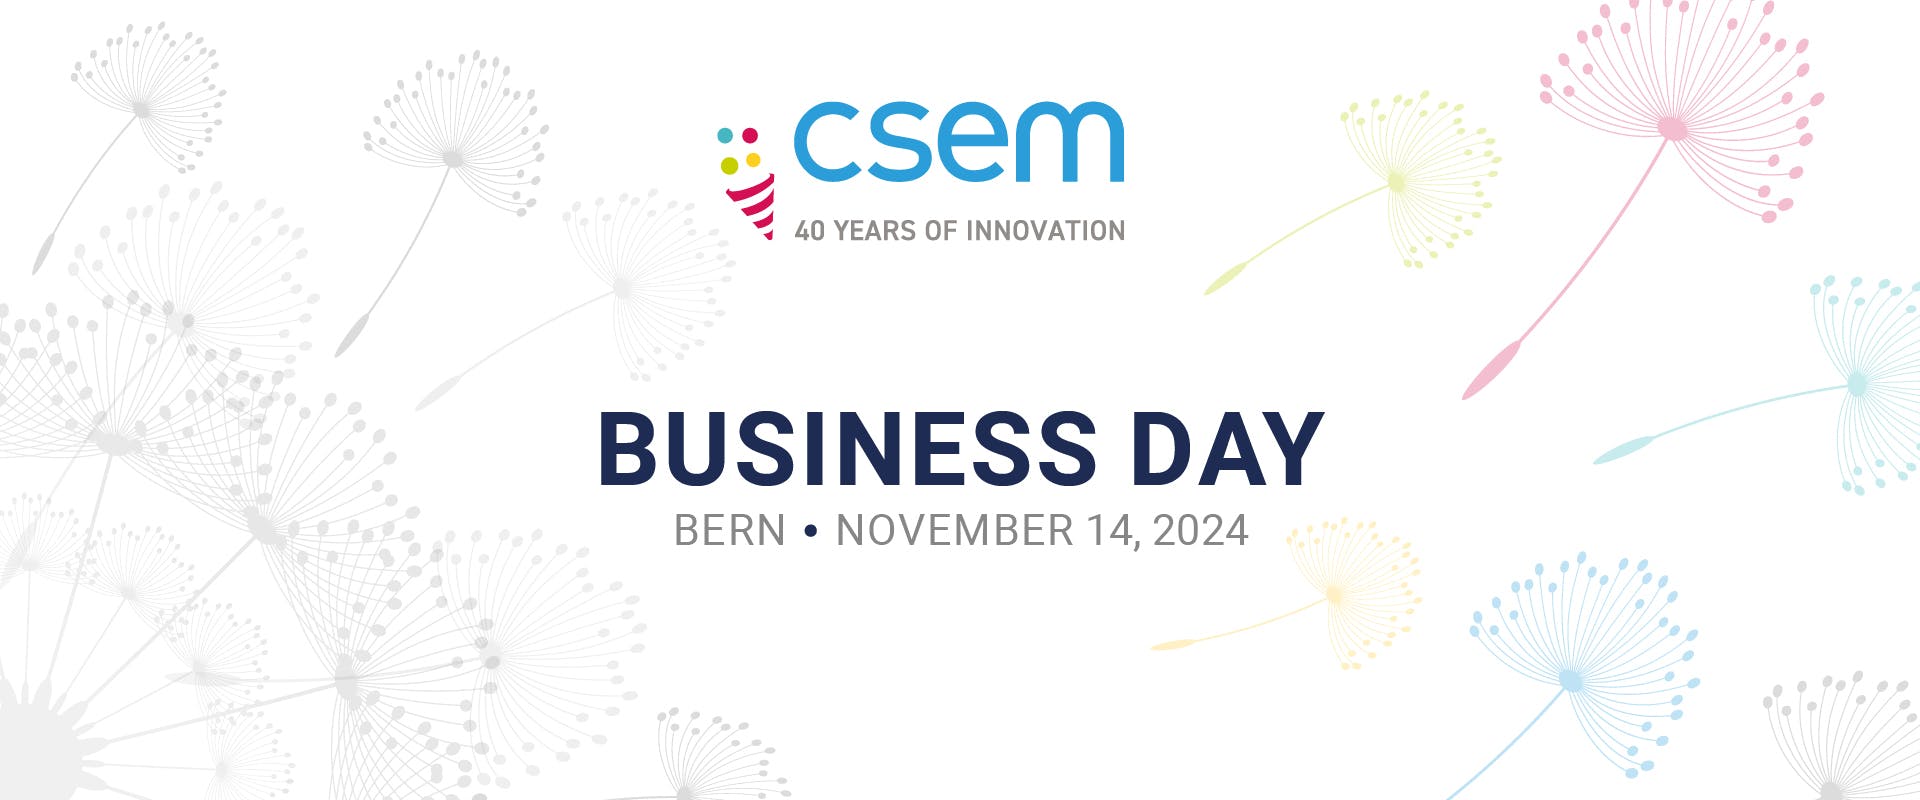 CSEM Business Day 2024 Banner